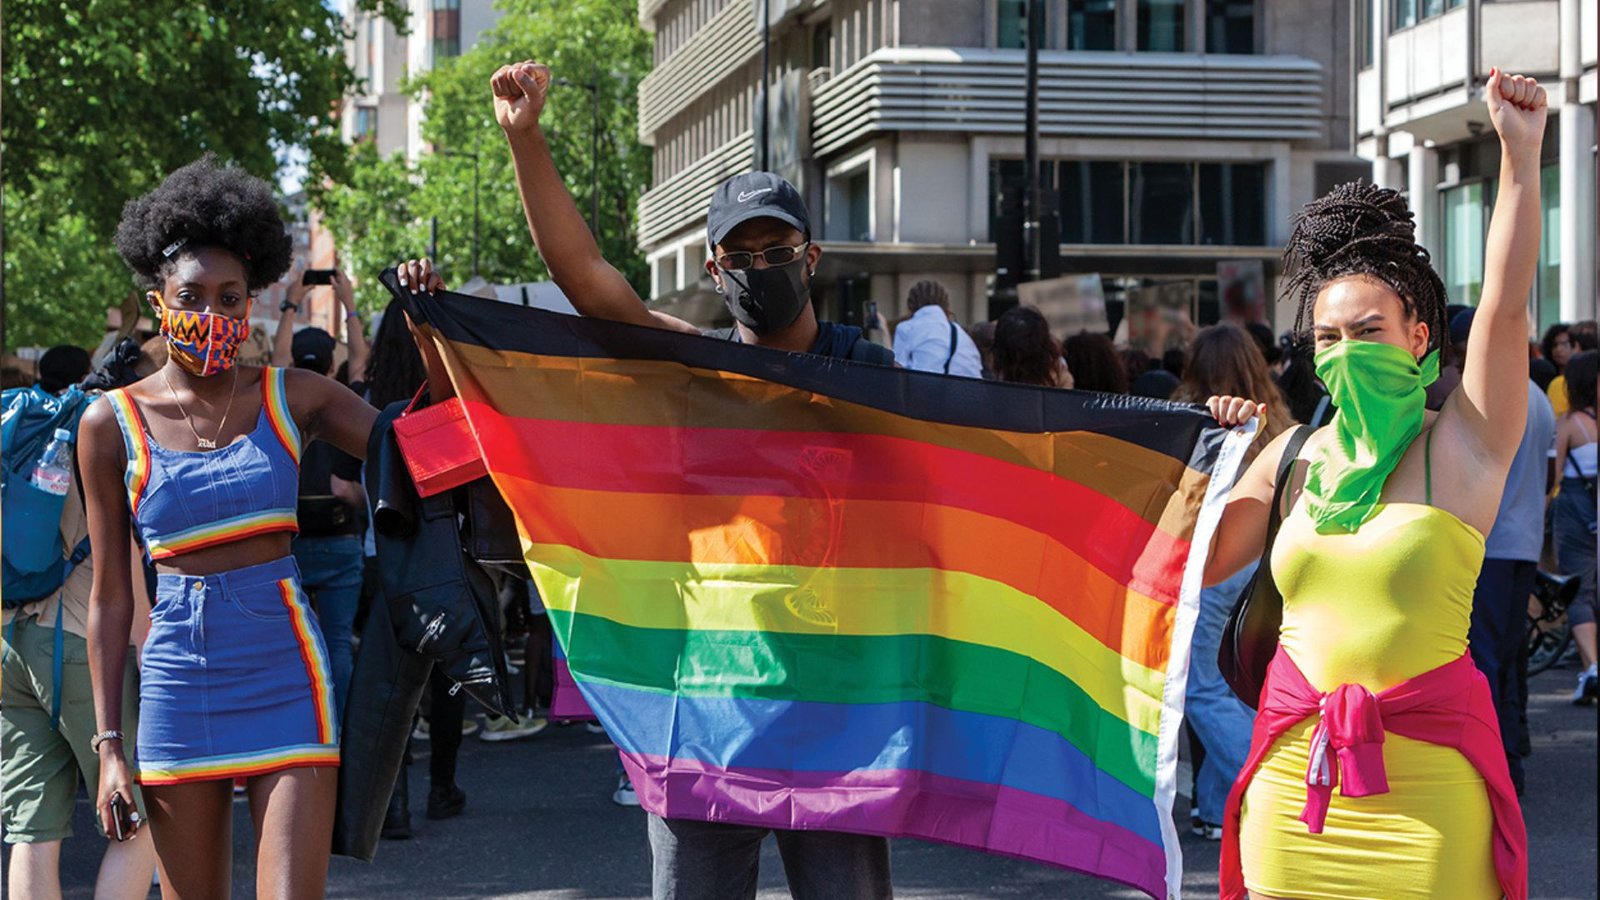 LGBTQ community protesting, holding their flag